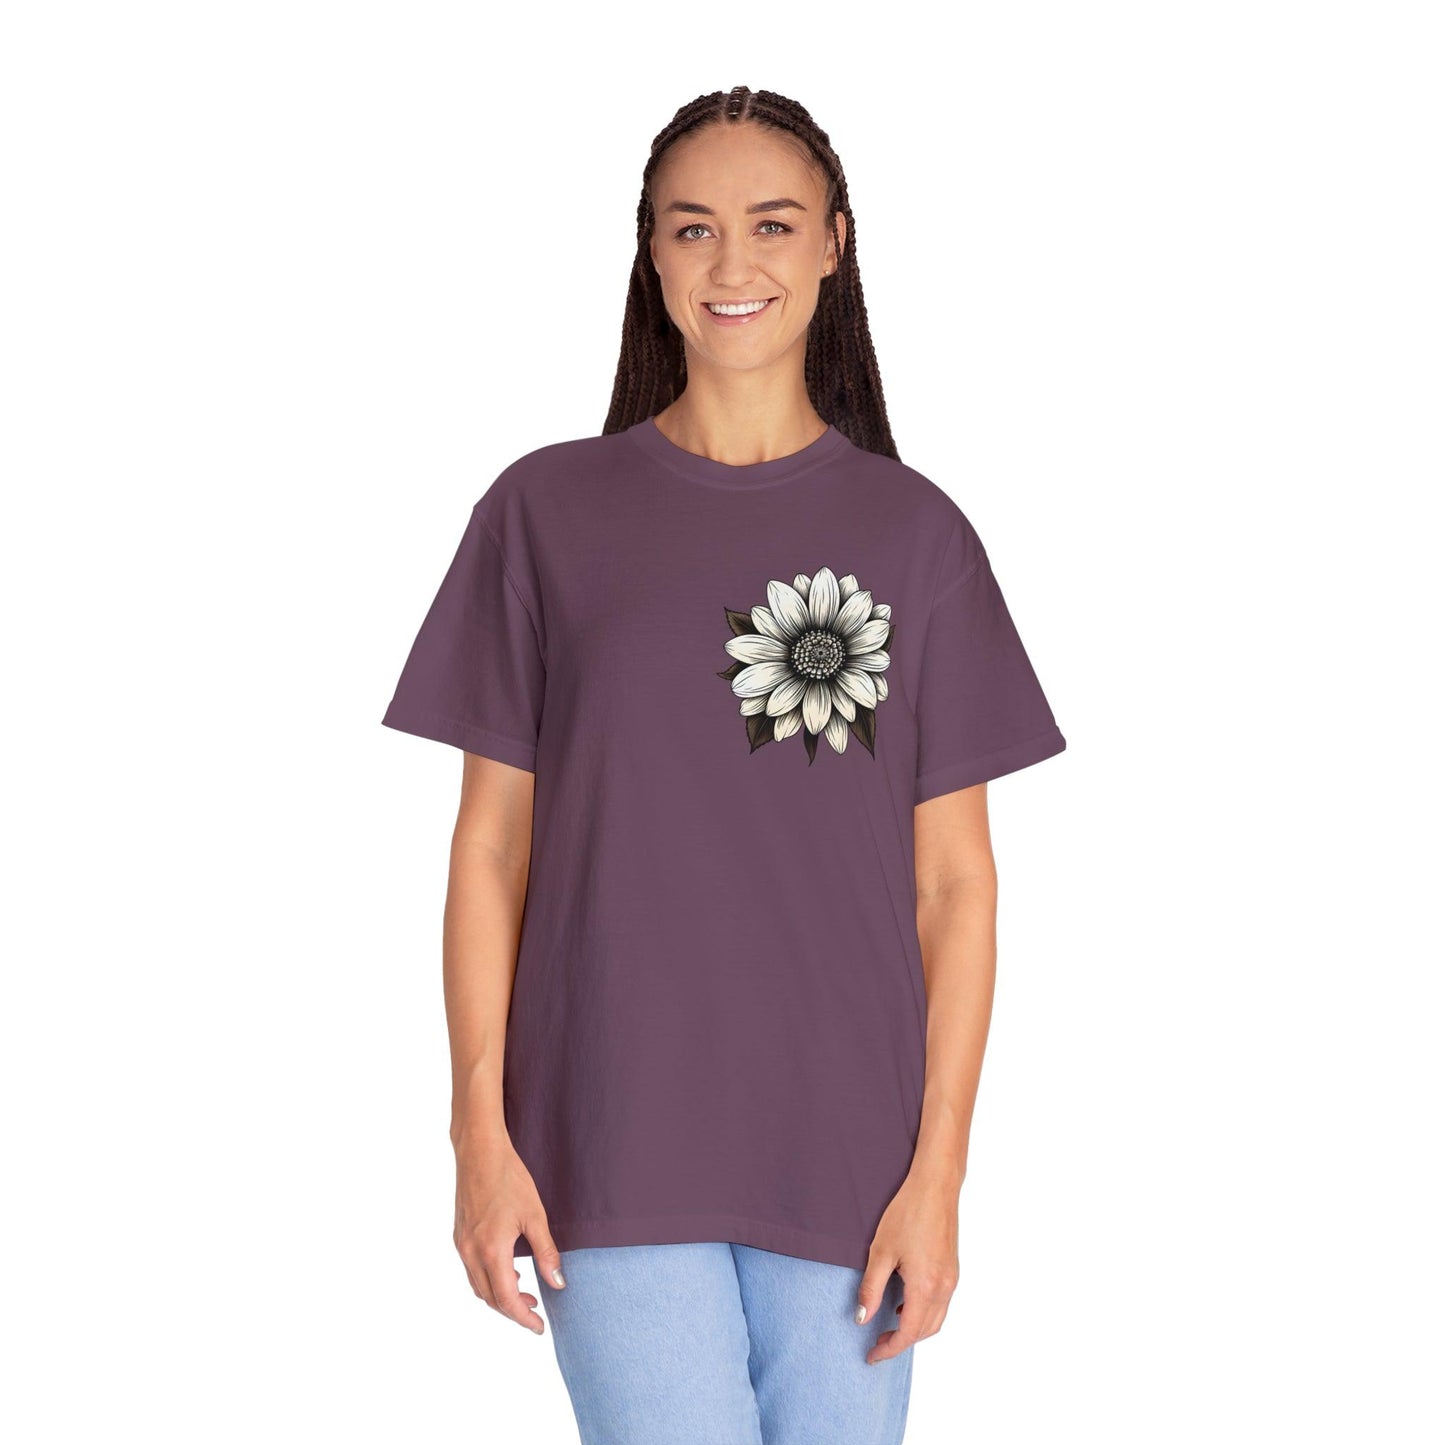 Sunflower Shirt Women Flower Shirt Aesthetic Women Top Floral Graphic Tee Floral Shirt Flower T-shirt, Wild Flower Shirt Gift For Her - Giftsmojo